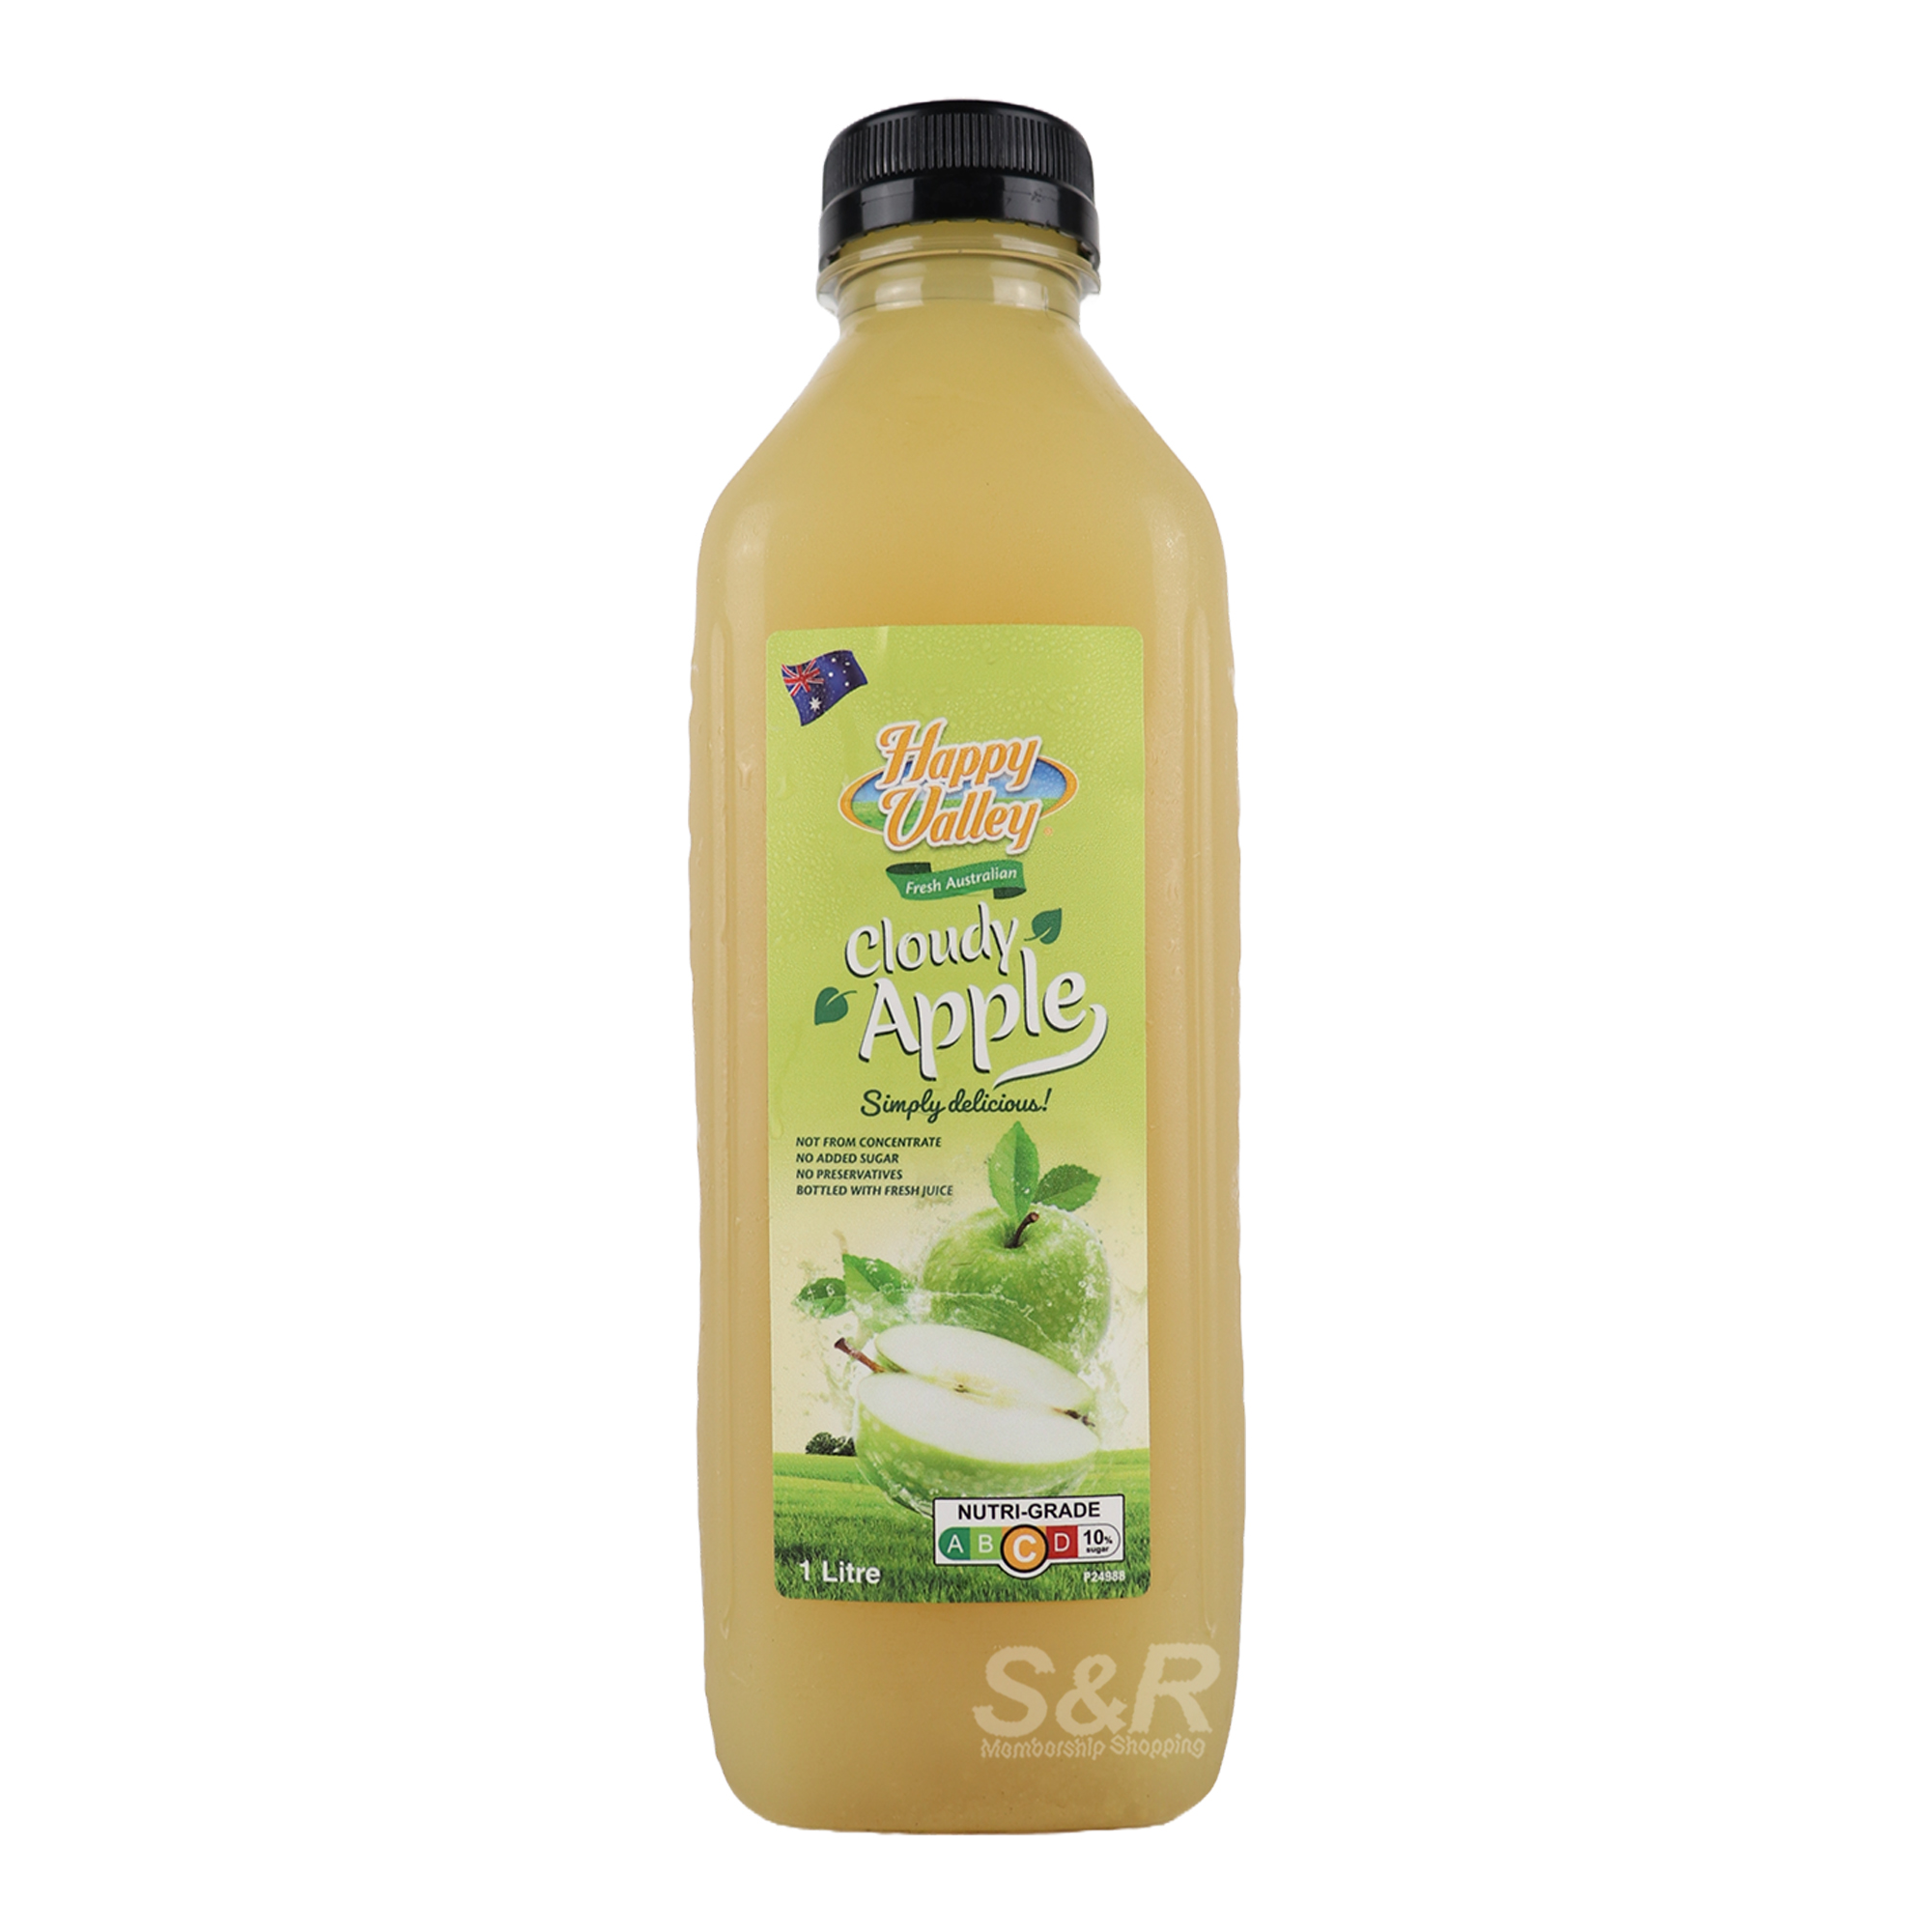 Happy Valley Cloudy Apple Juice 1L